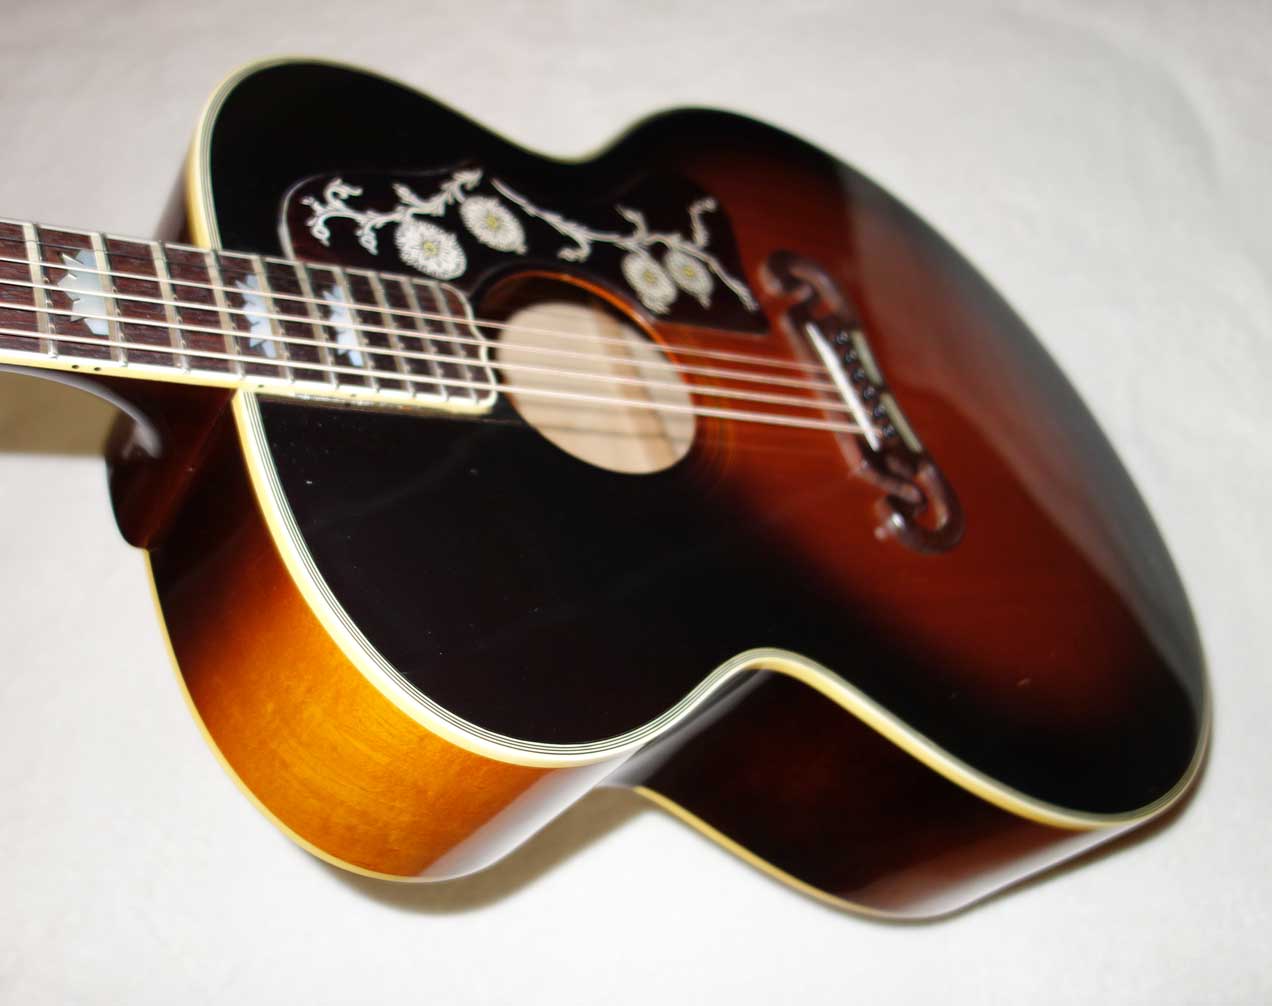 1991 Orville By Gibson J200 Super Jumbo Acoustic Guitar in Sunburst (MIJ Terada)